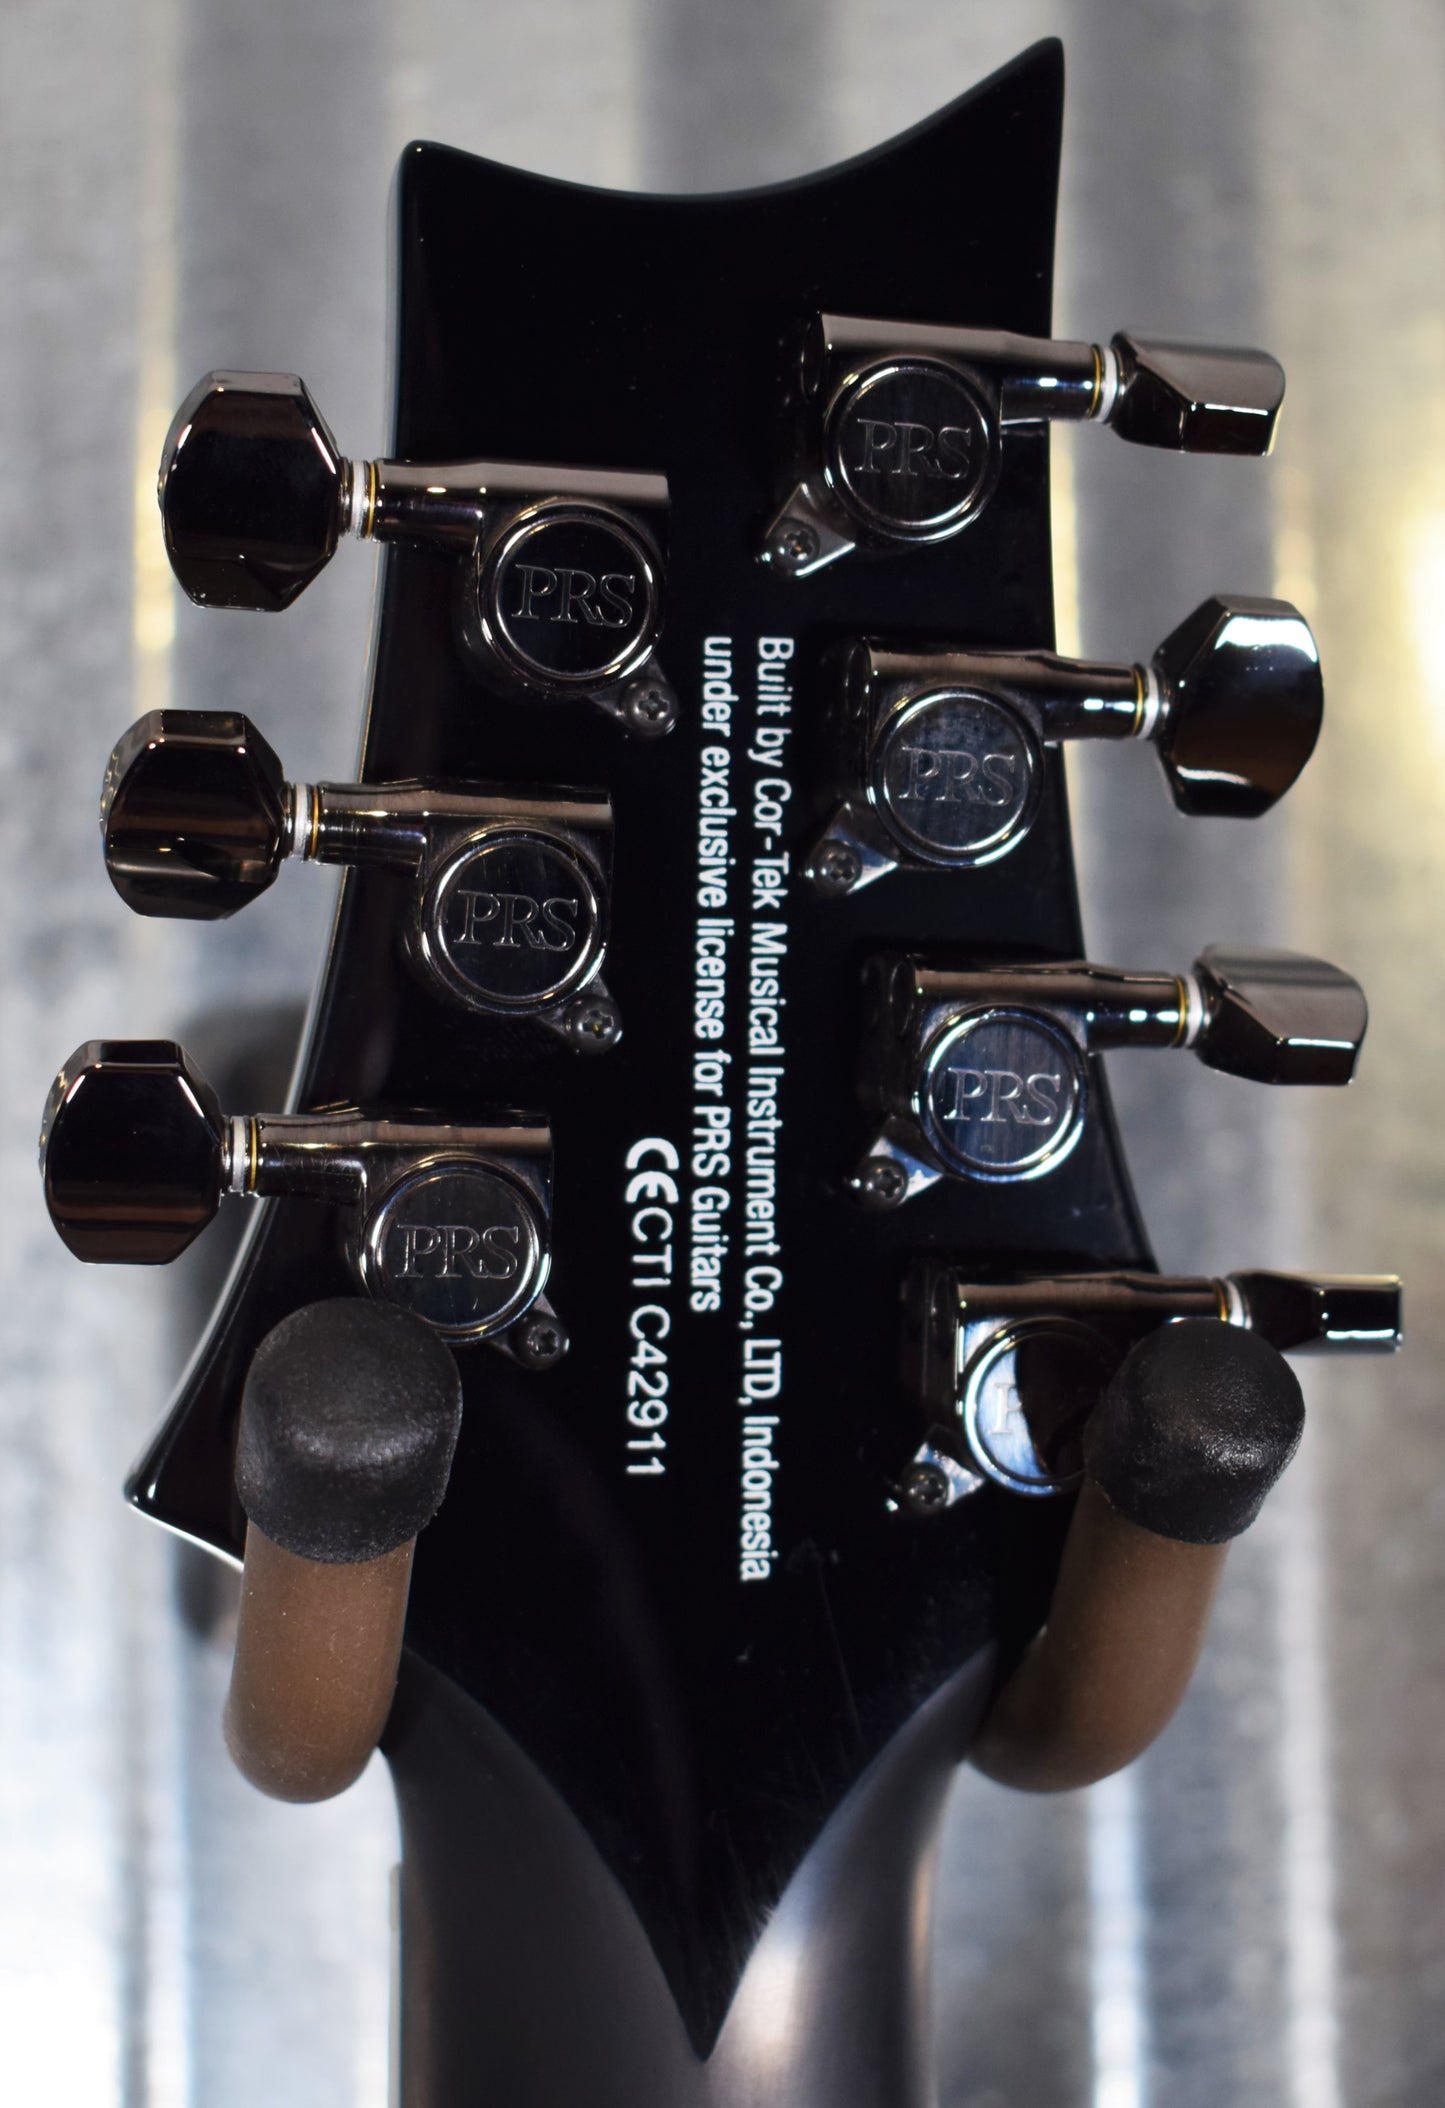 PRS Paul Reed Smith SE Mark Holcomb SVN Burst 7 String Guitar & Bag #2911